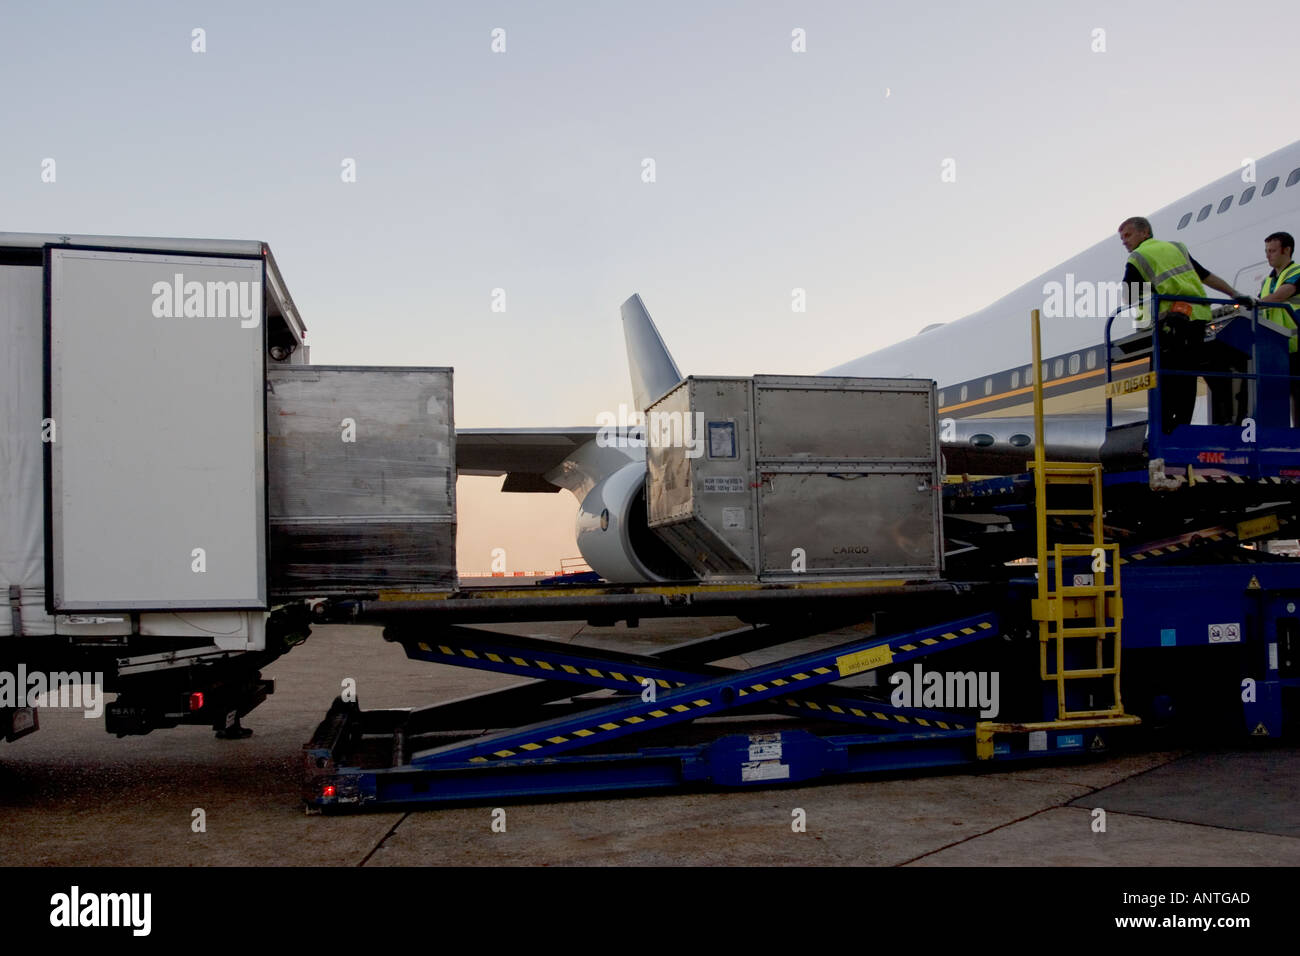 Loading cargo into aeroplane at airport UK Stock Photo